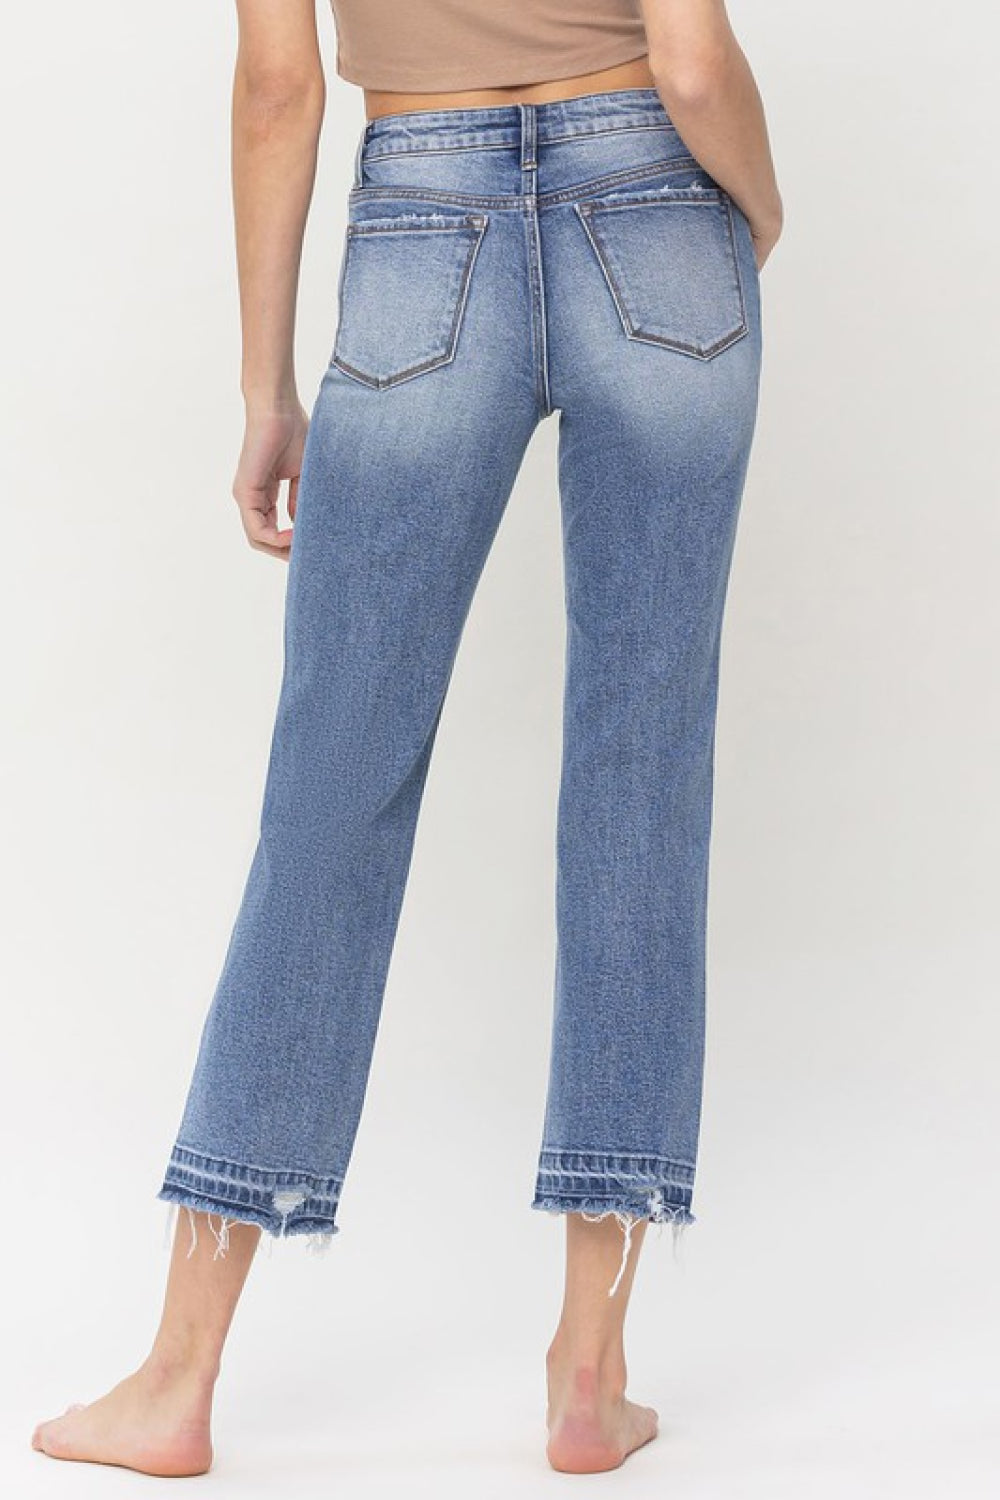 Lovervet "Lena" High Rise Crop Straight Jeans